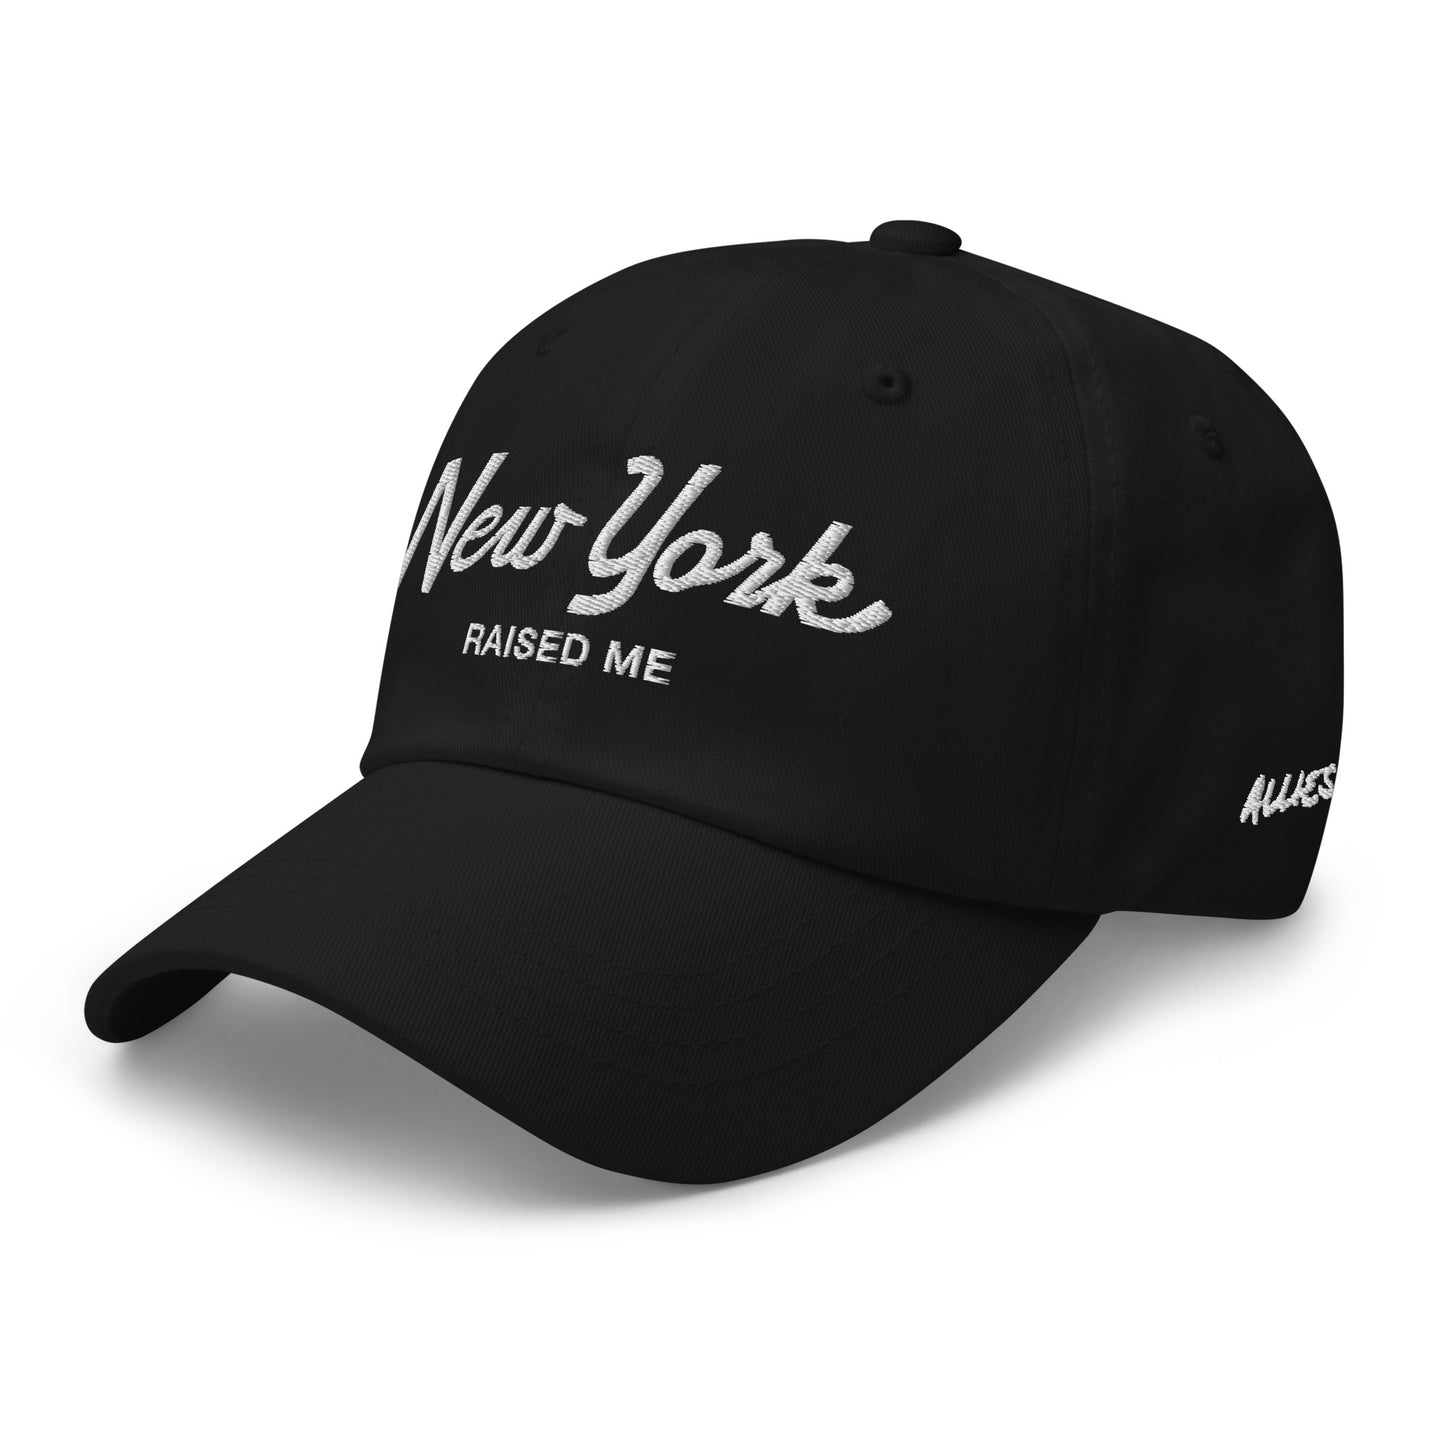 New York Raised Me Hat